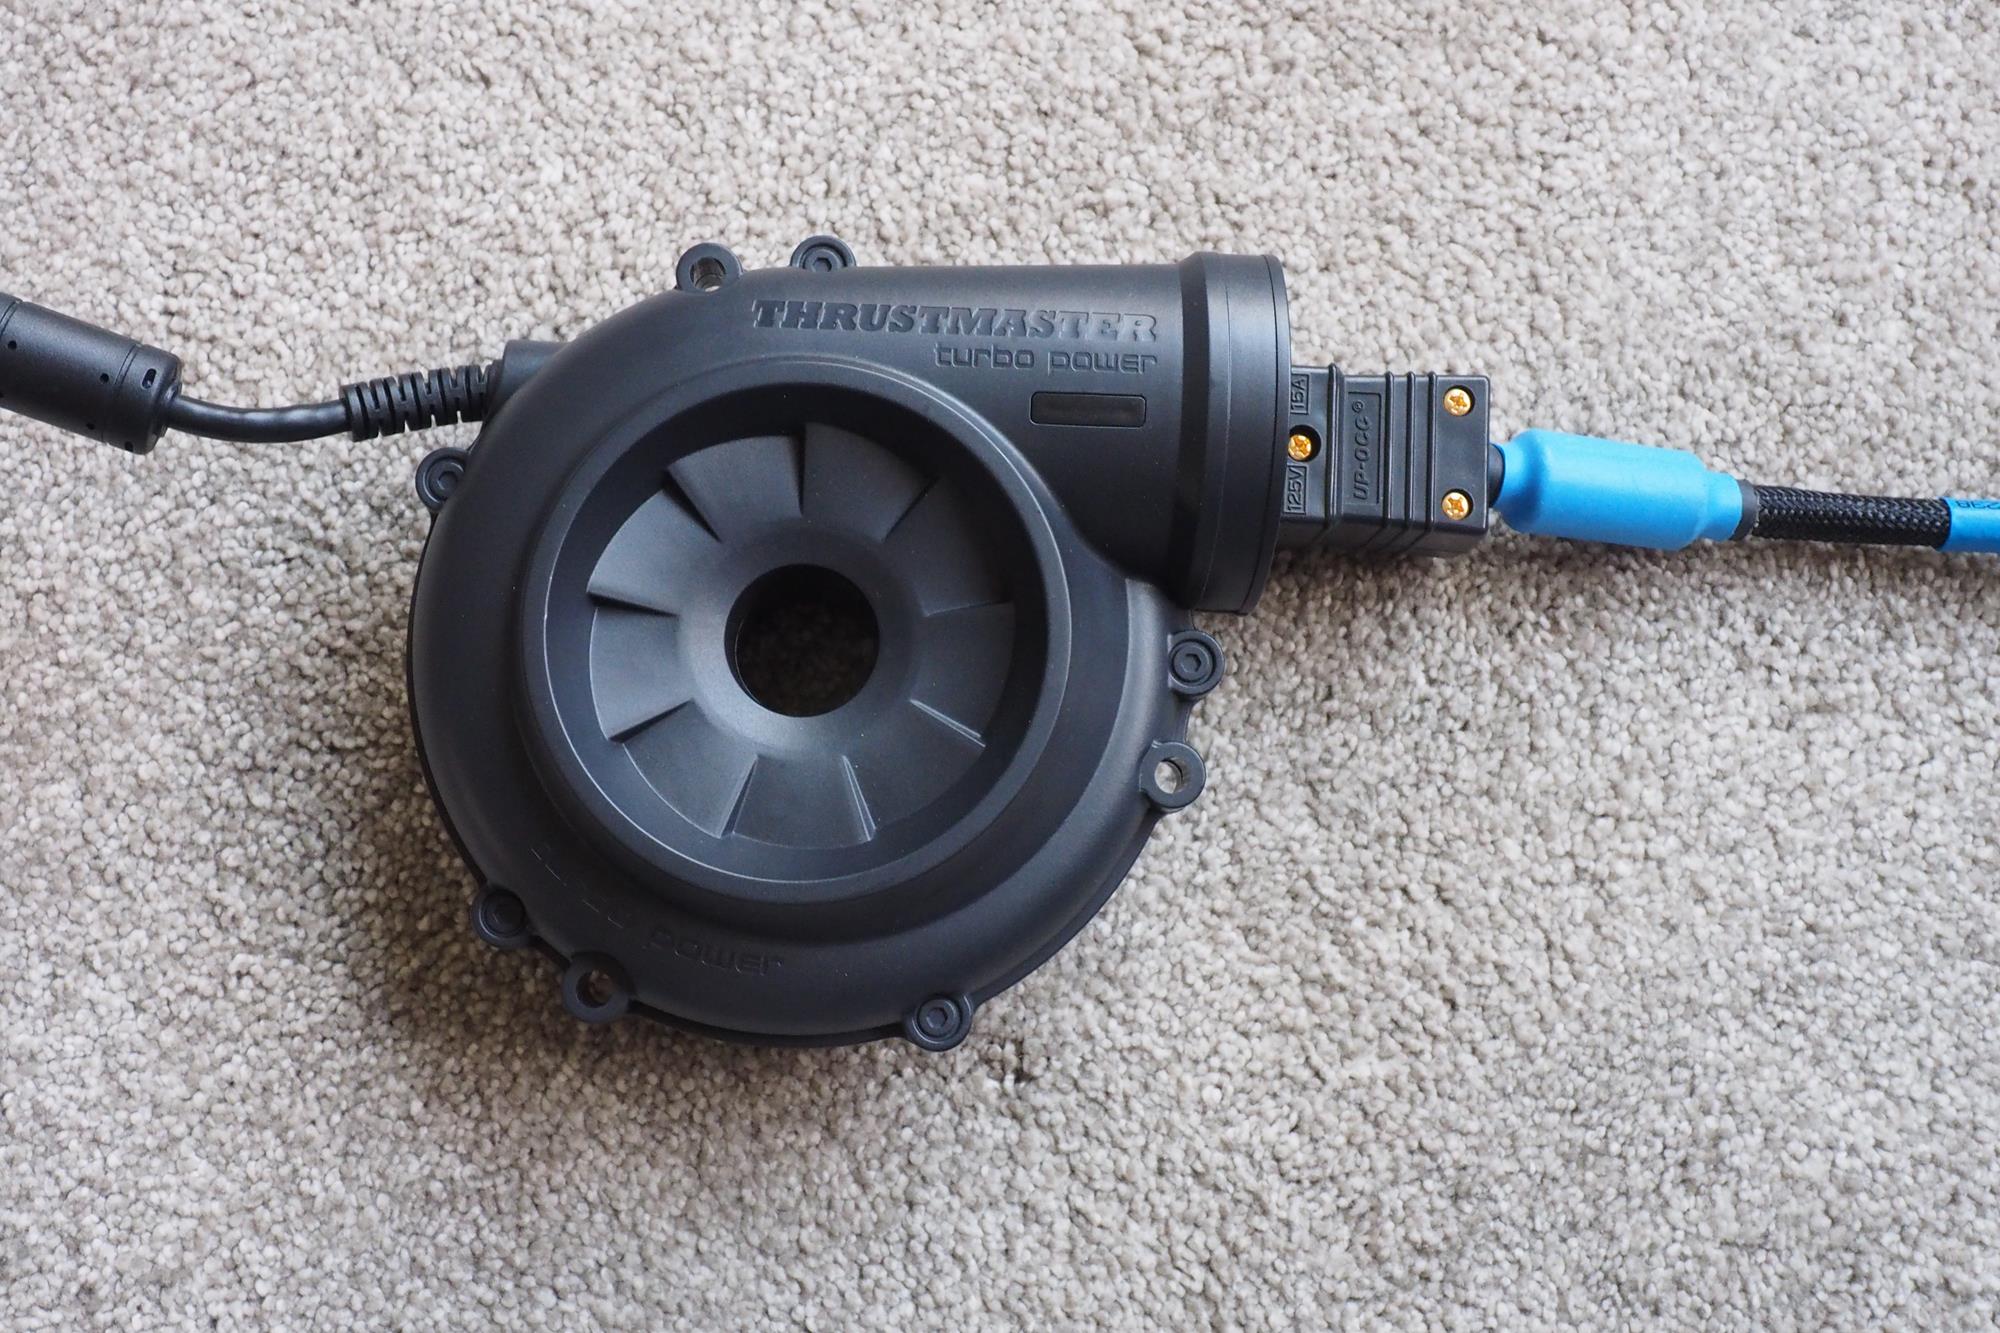 Thrustmaster T-GT racing wheel's power supply unit on carpet.